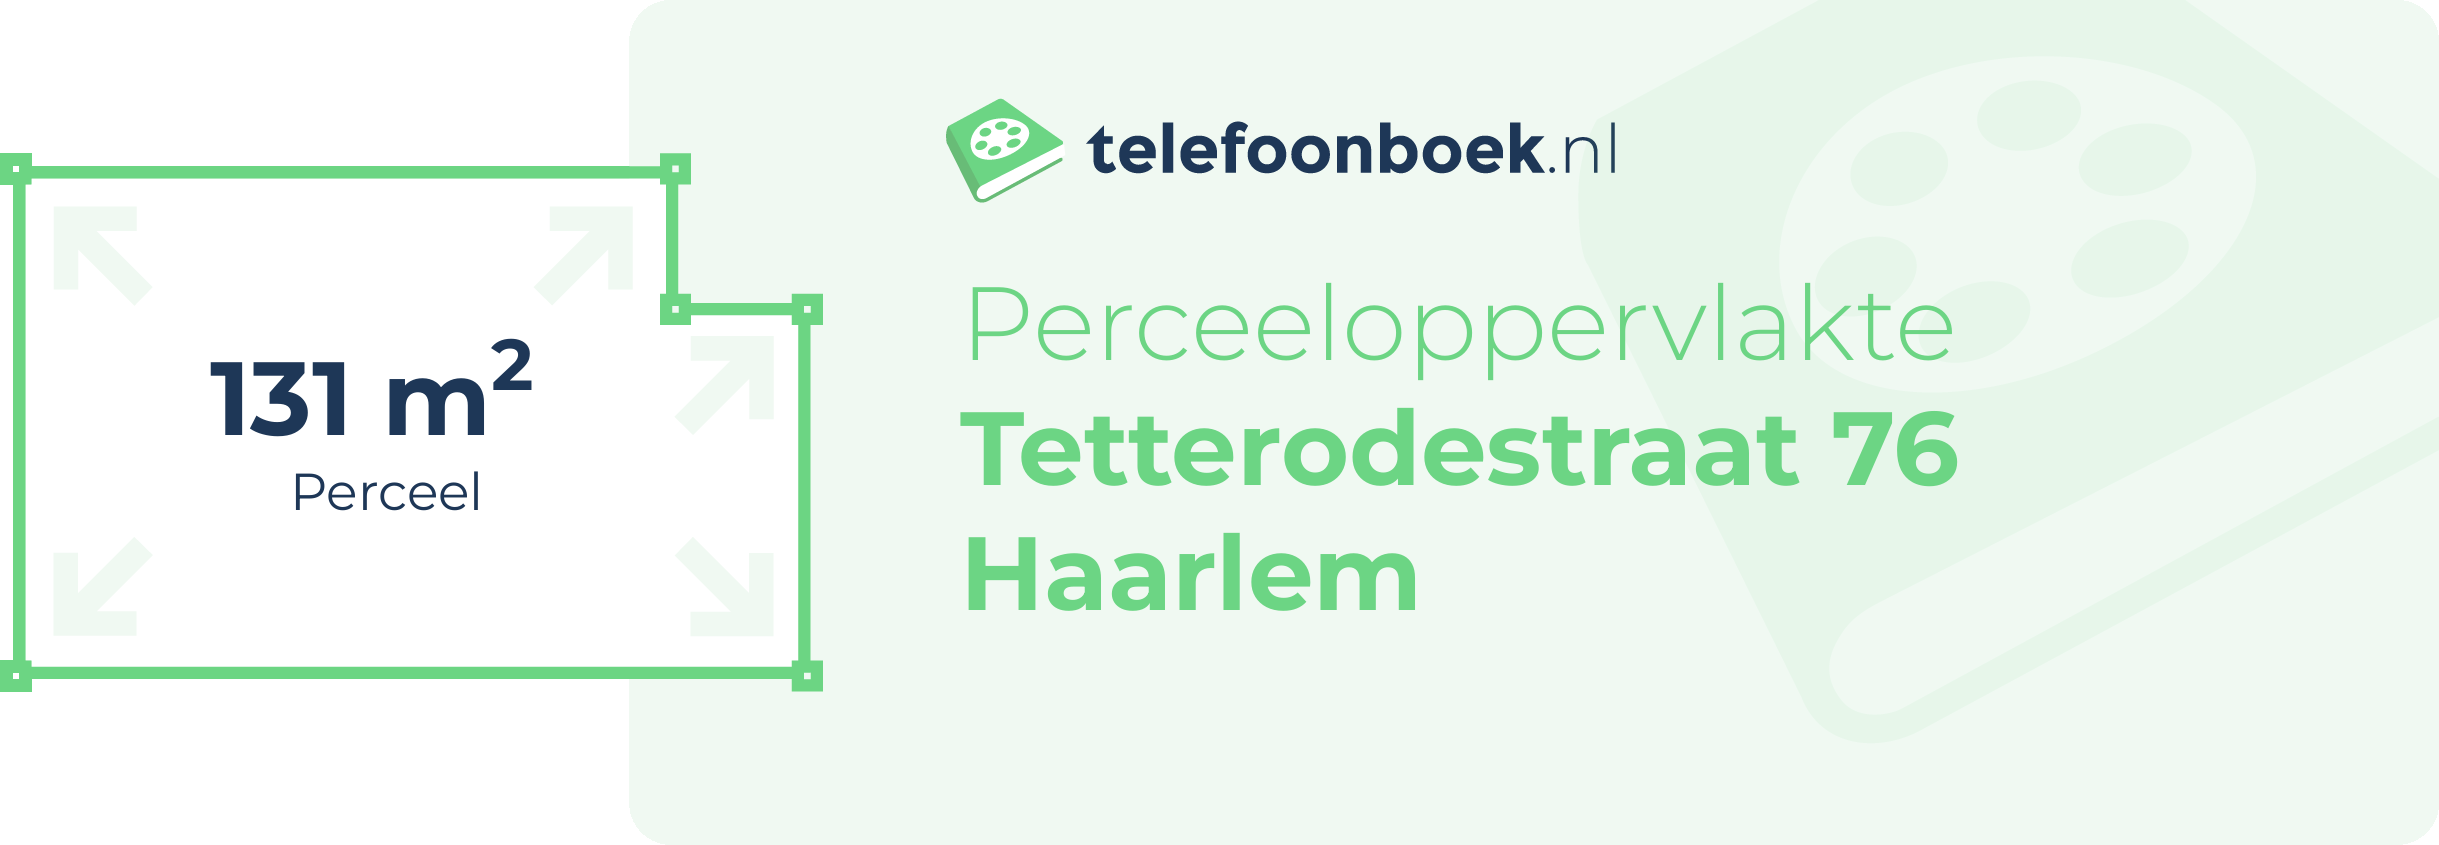 Perceeloppervlakte Tetterodestraat 76 Haarlem